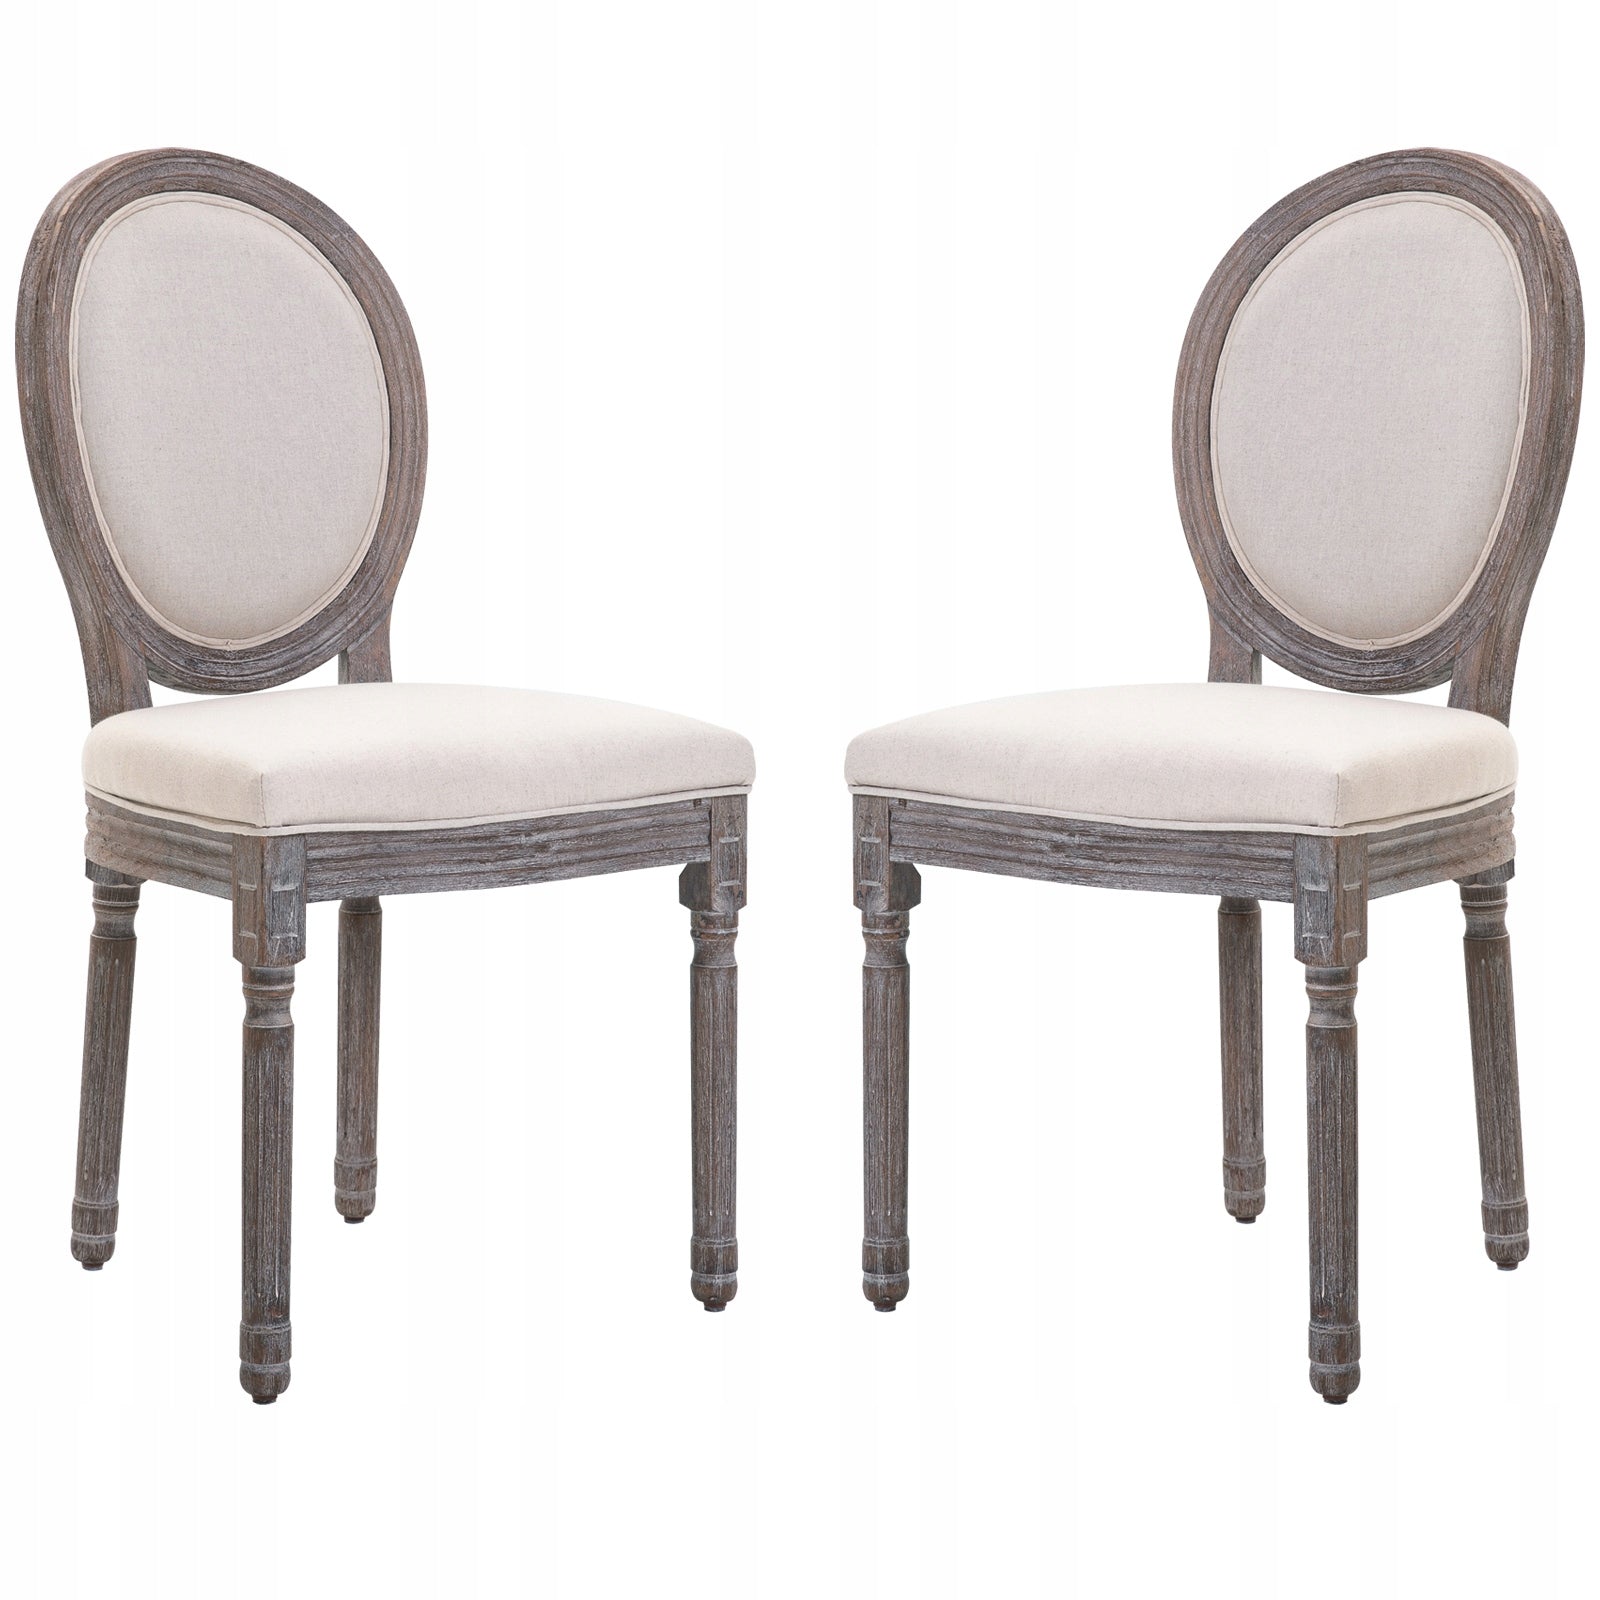 Second chance HOMCOM Set of 2 dining room chairs retro design